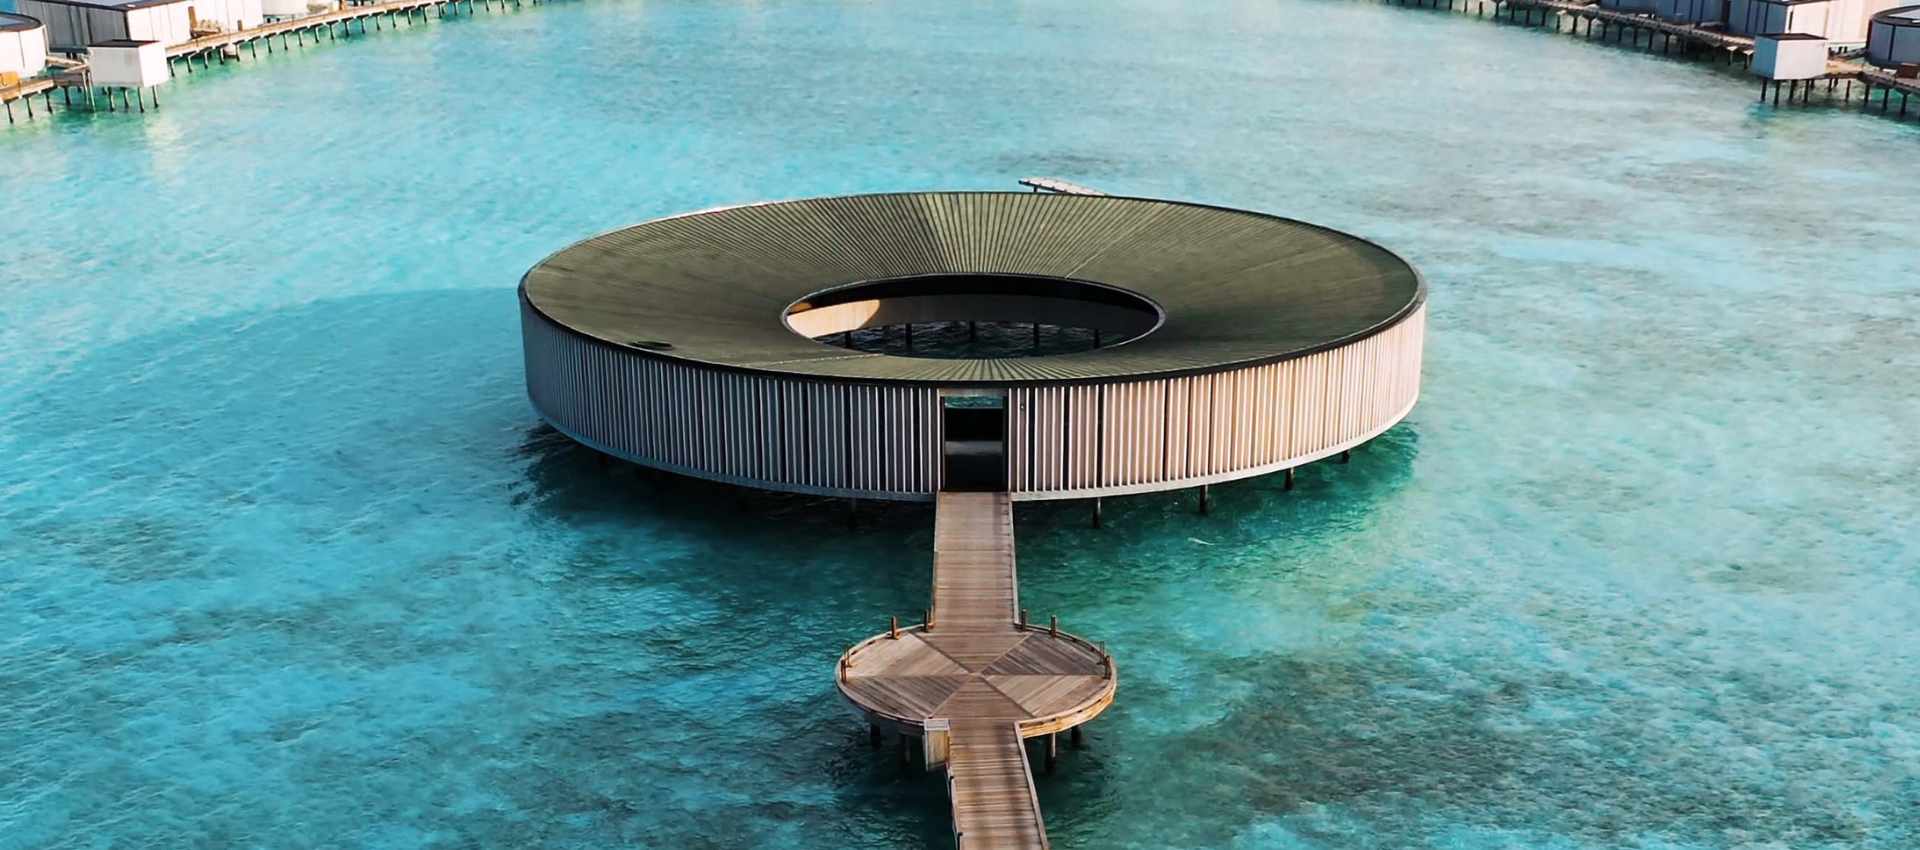 Ritz-Carlton Spa in the Maldives, Fari Islands | BuDhaGirl